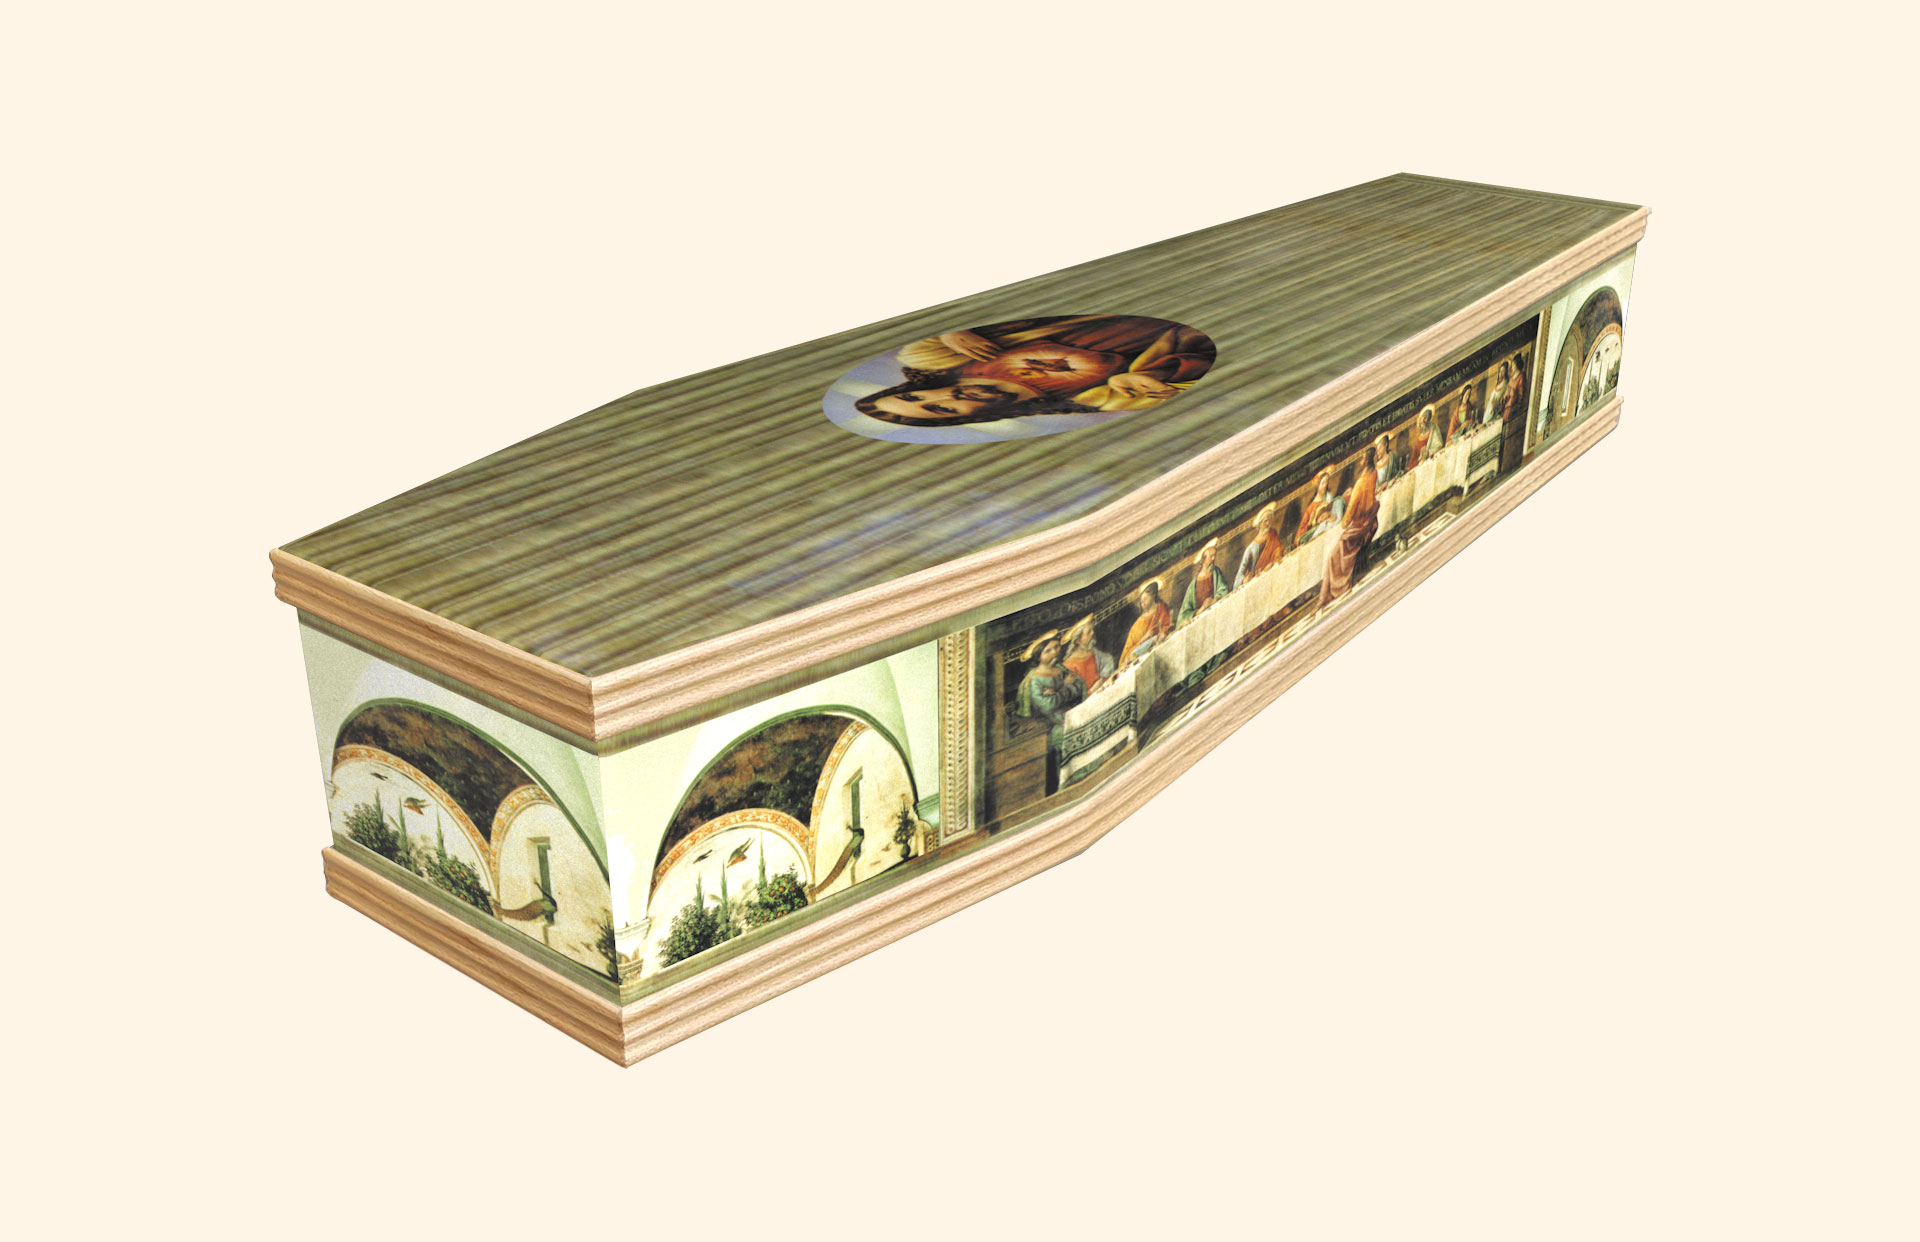 Last Supper design on a classic coffin